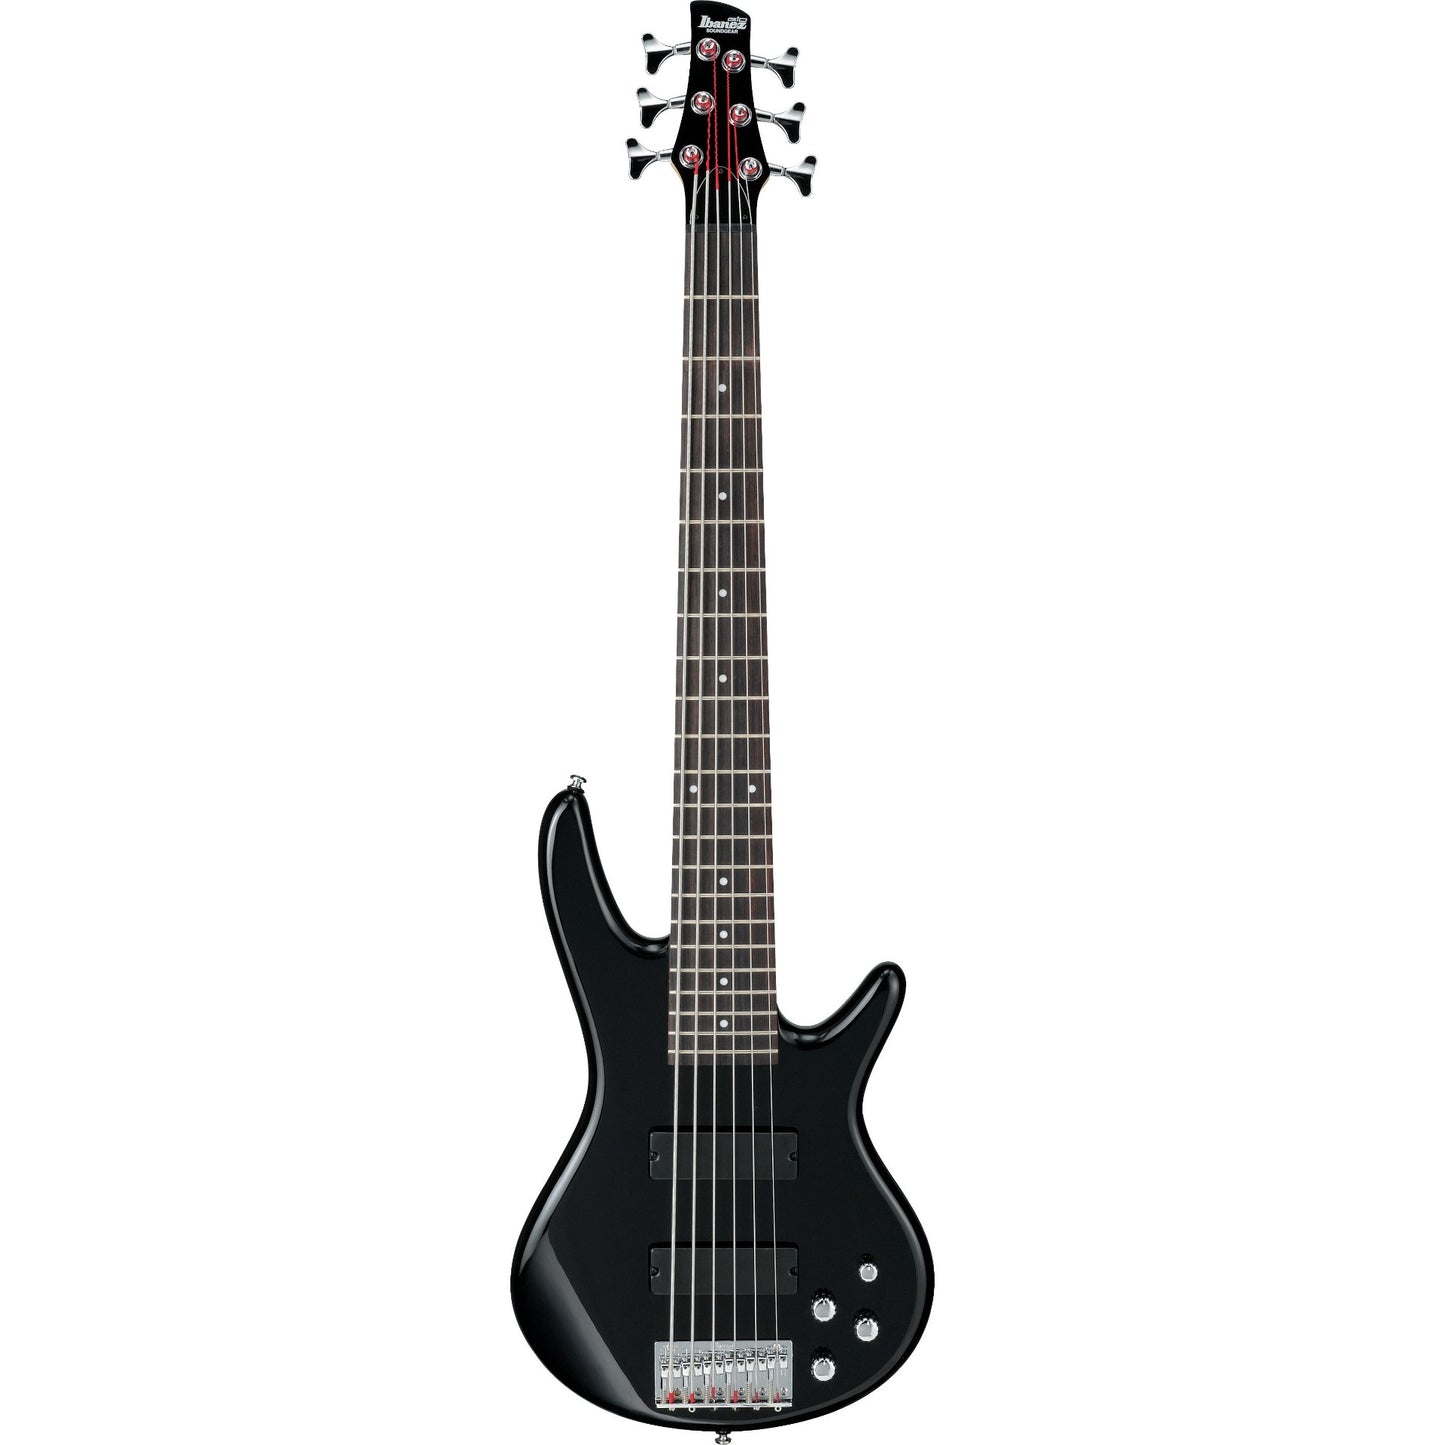 Ibanez Gsr206bk 6-string Bass Black